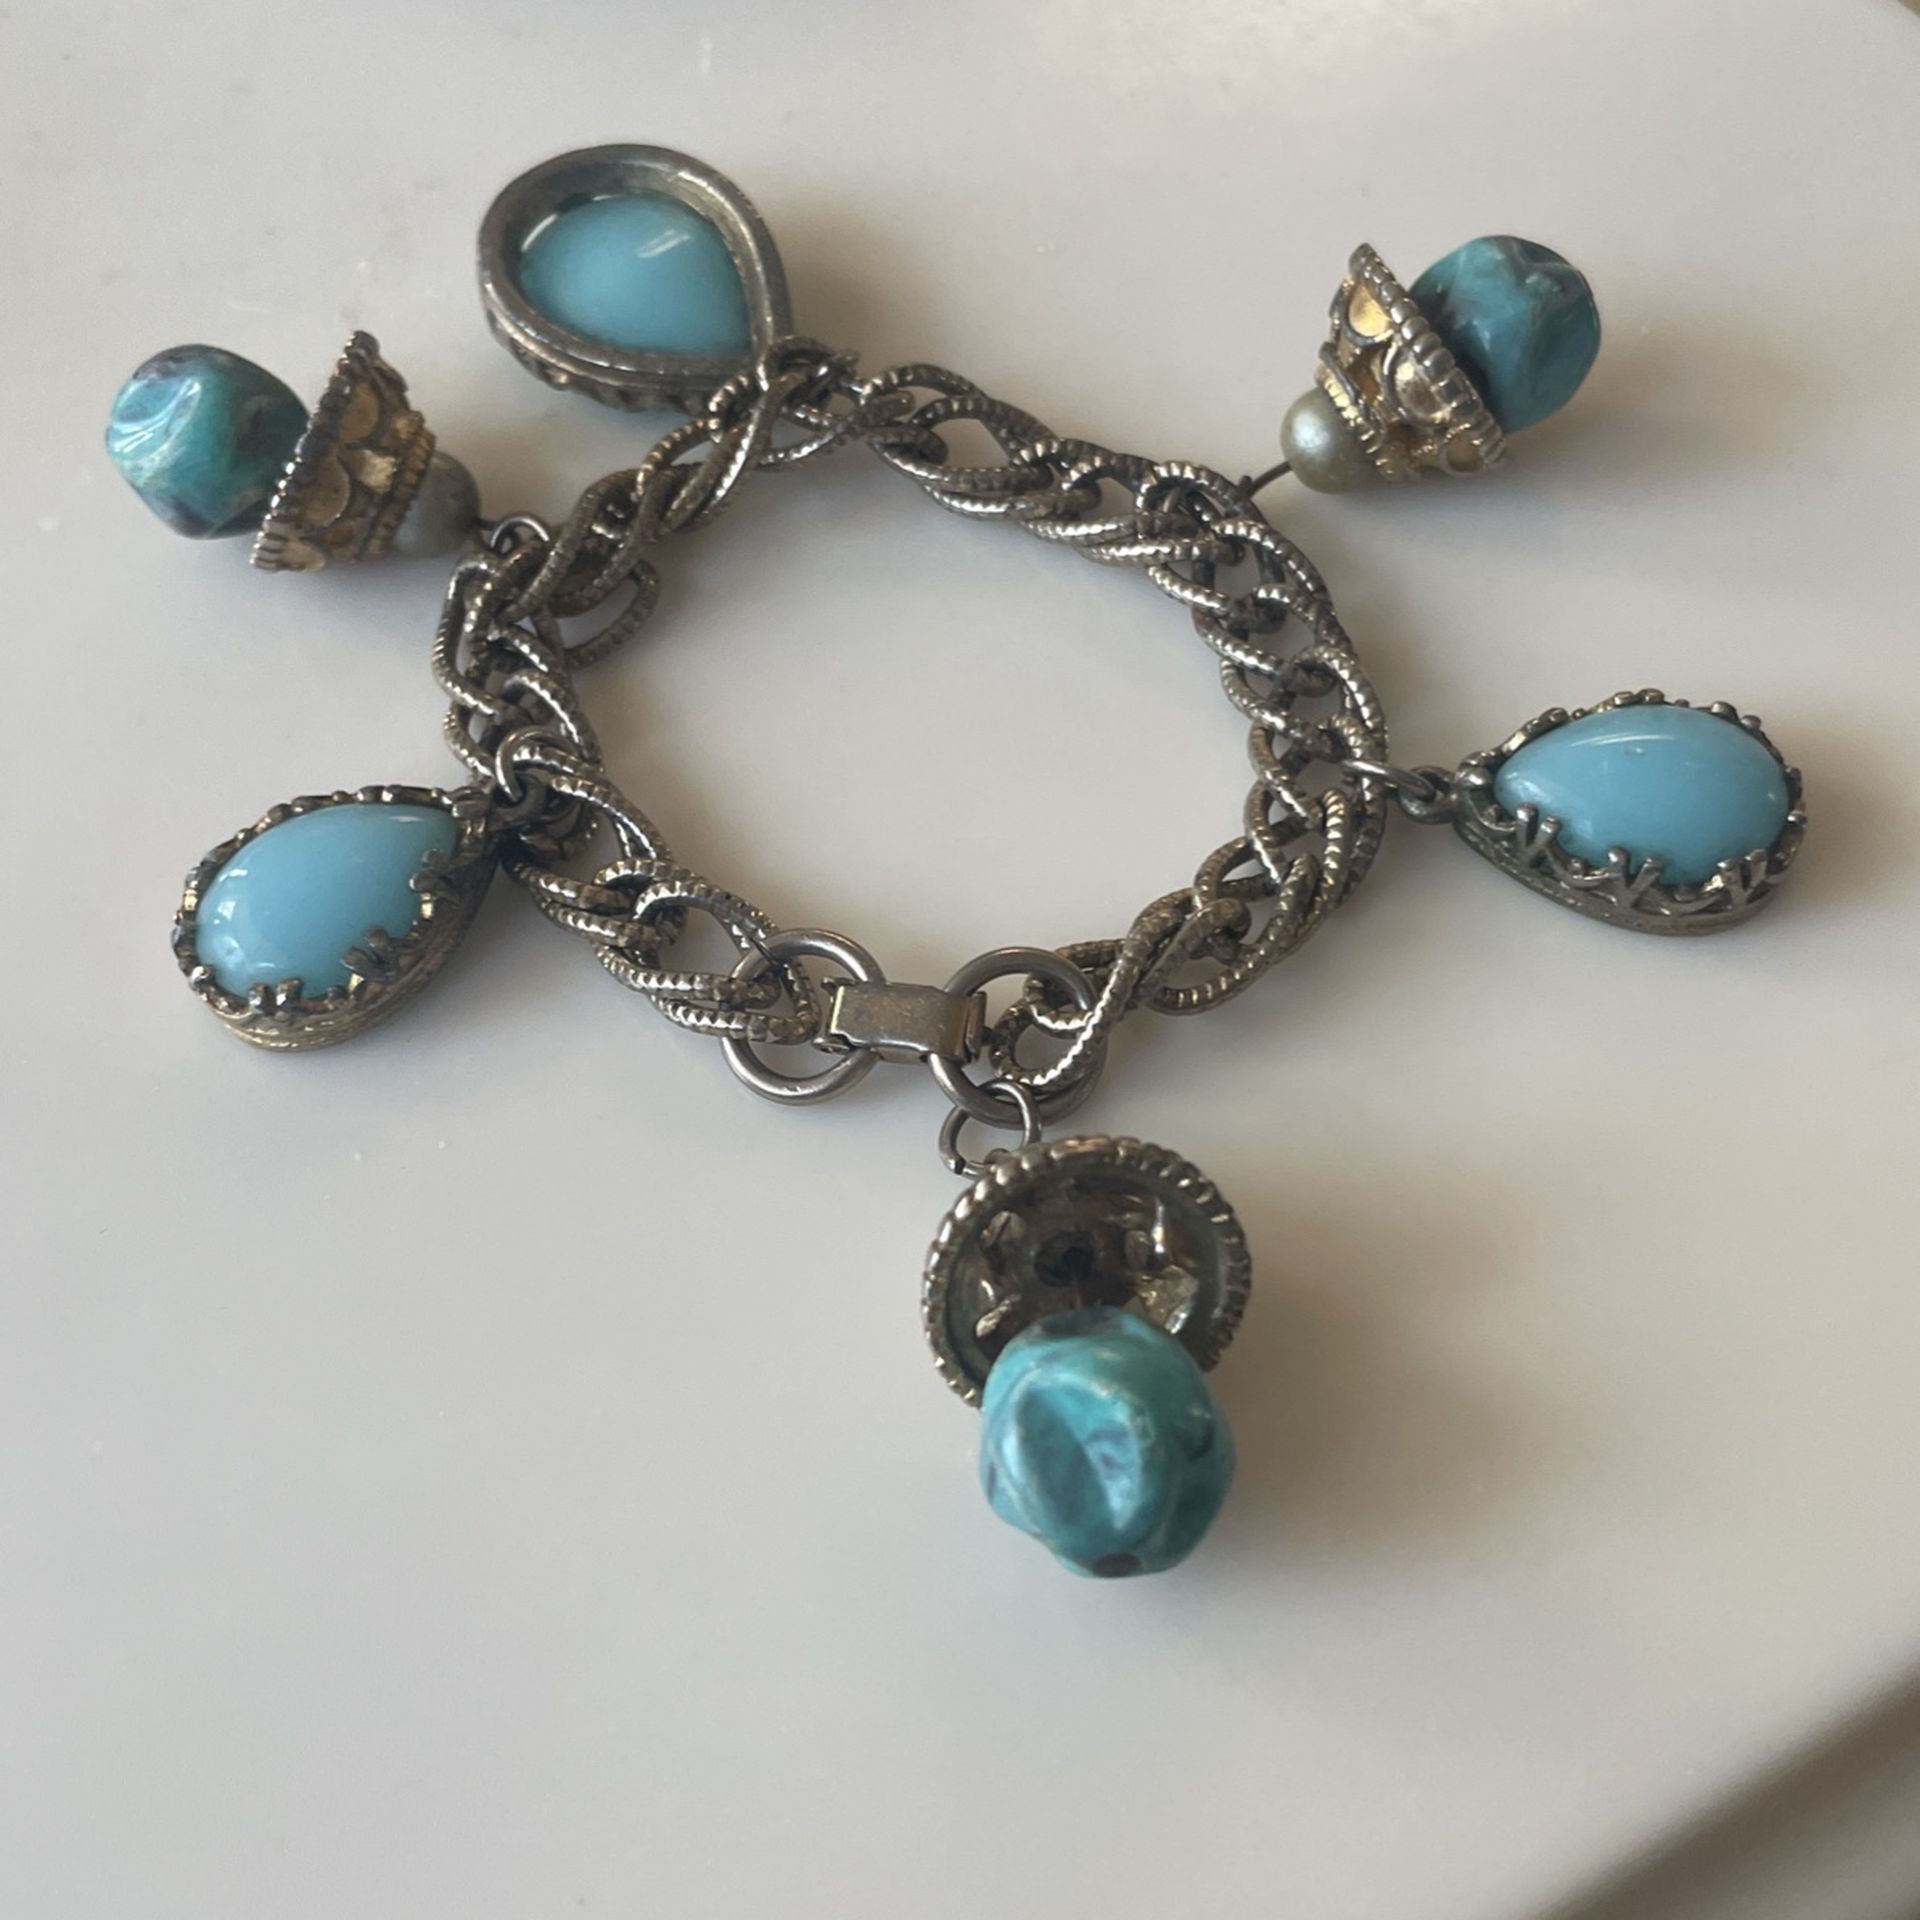   Turquoise Charm Bracelet